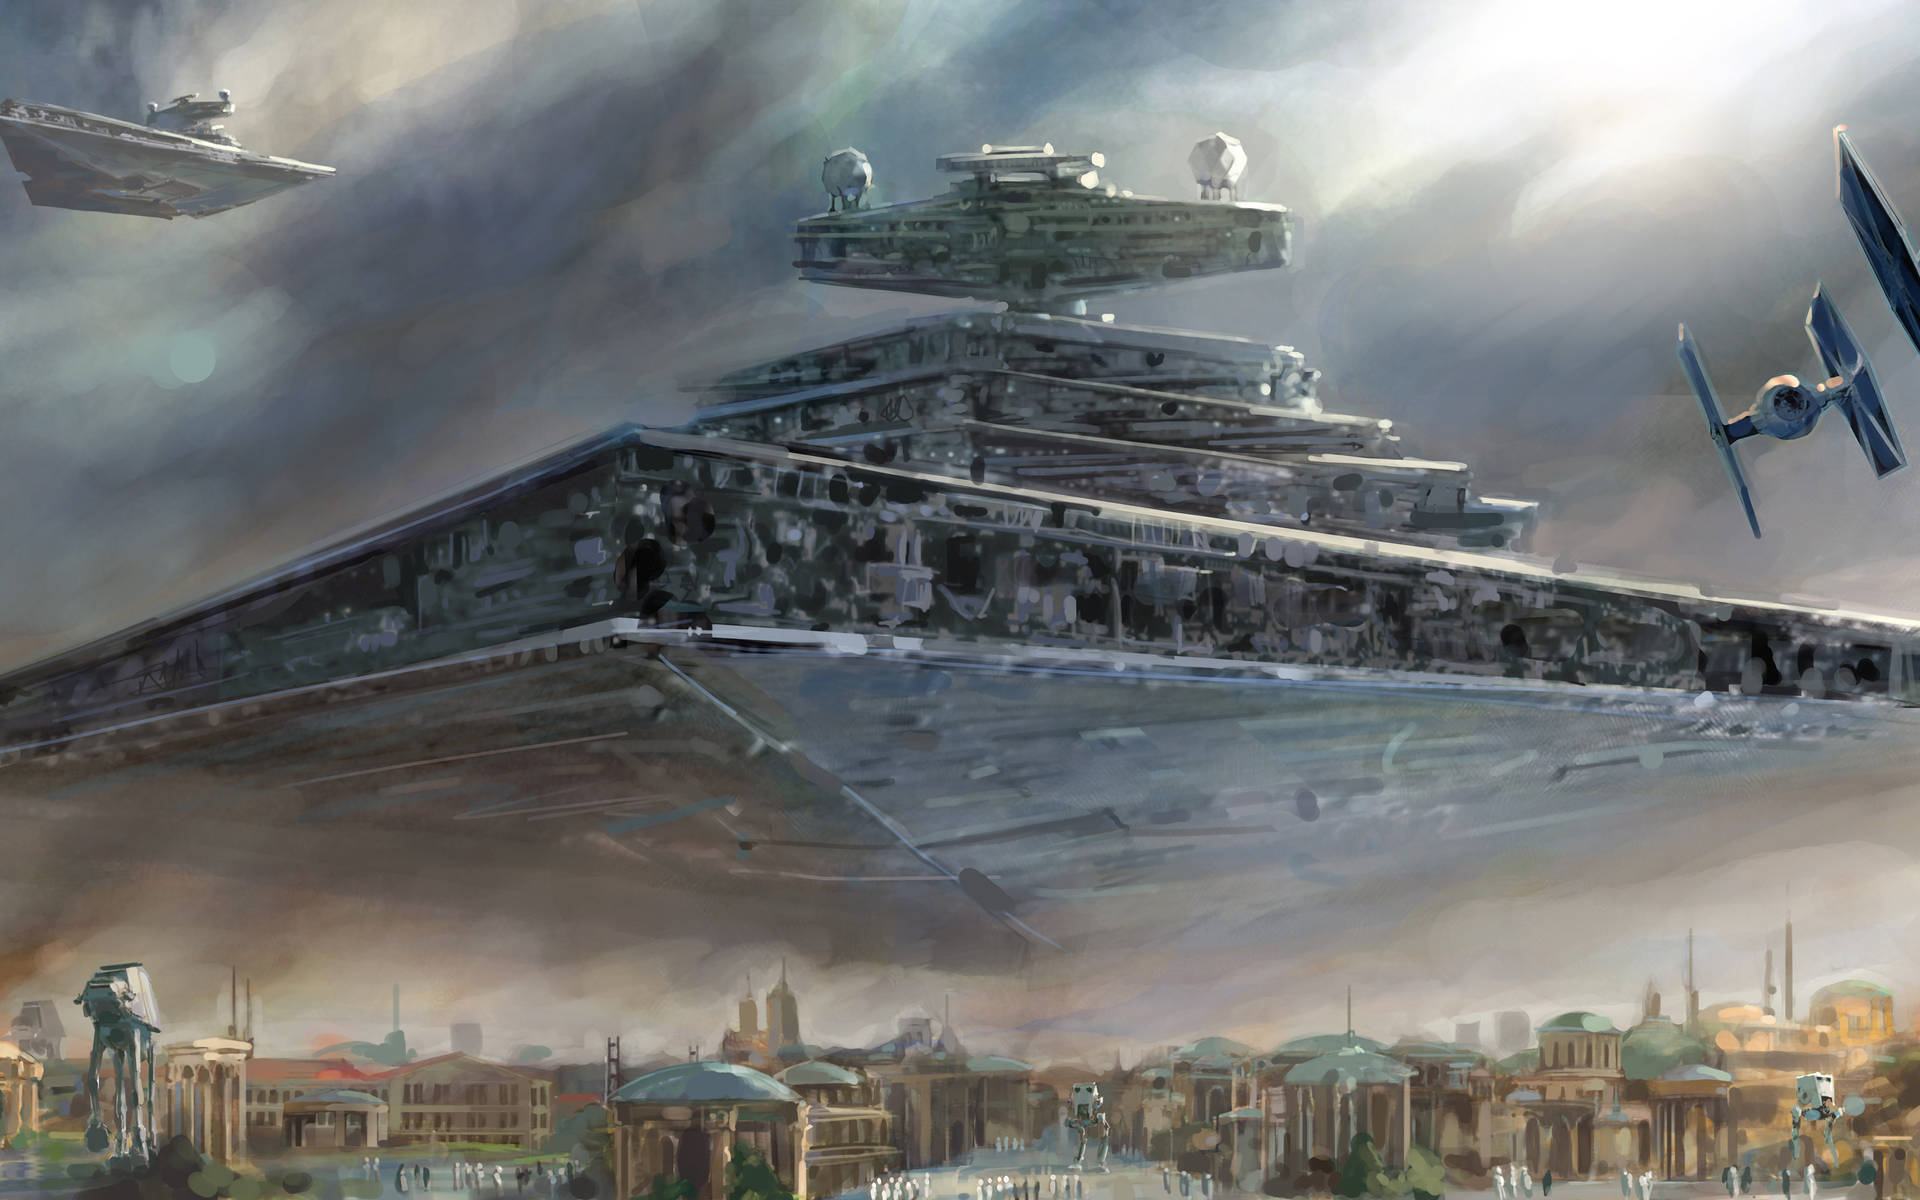 Star Wars Star Wars: The Force Awakens Wallpaper